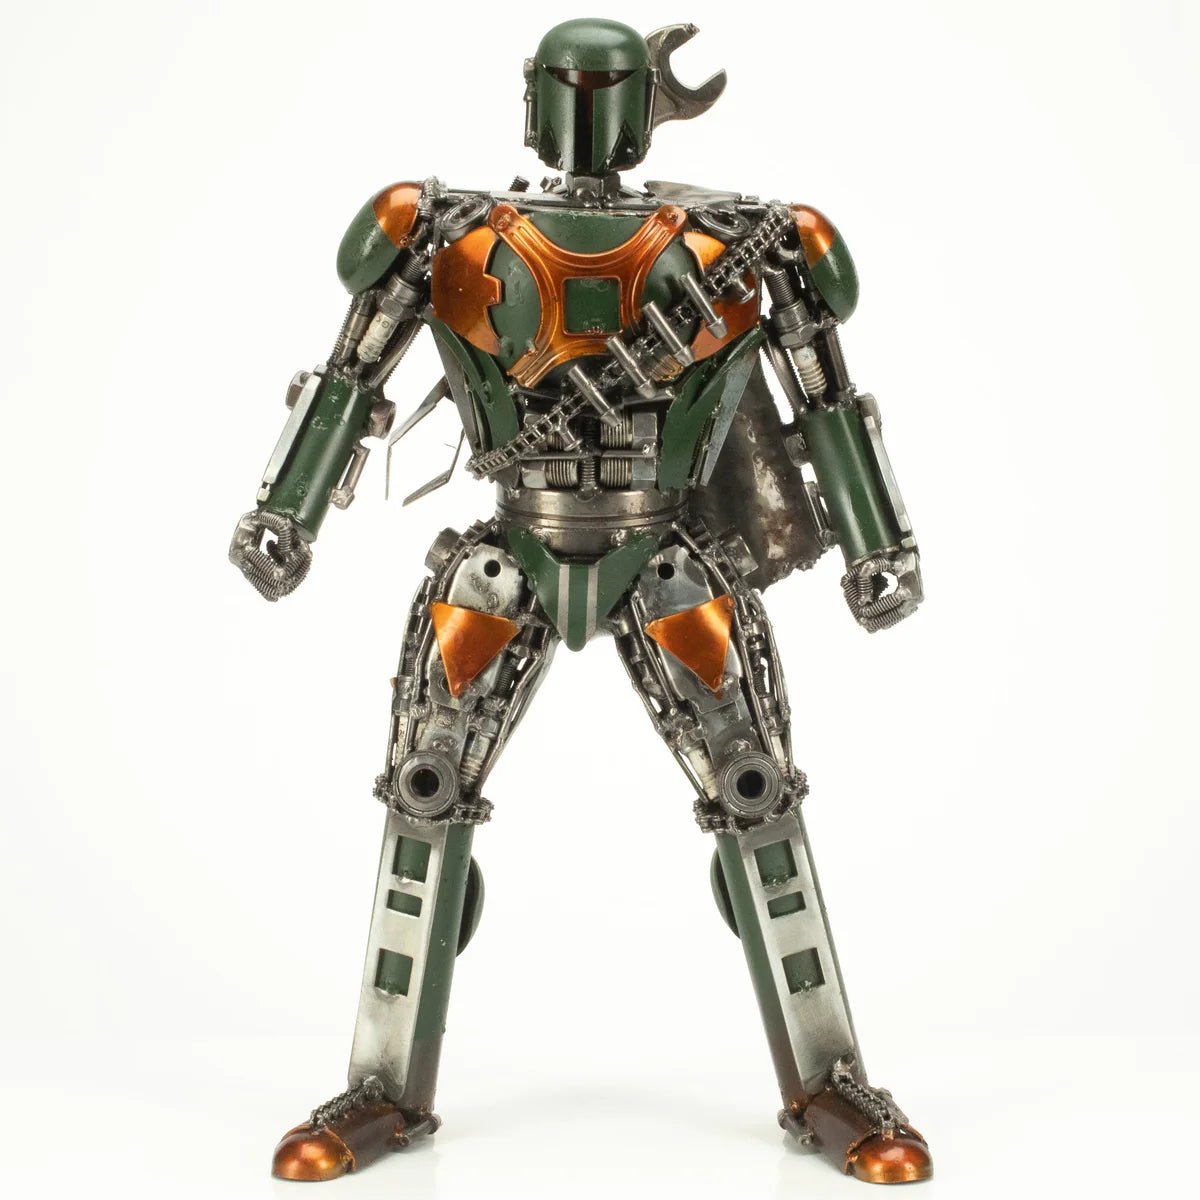 Recycled Metal Art: Unique Robot Sculpture